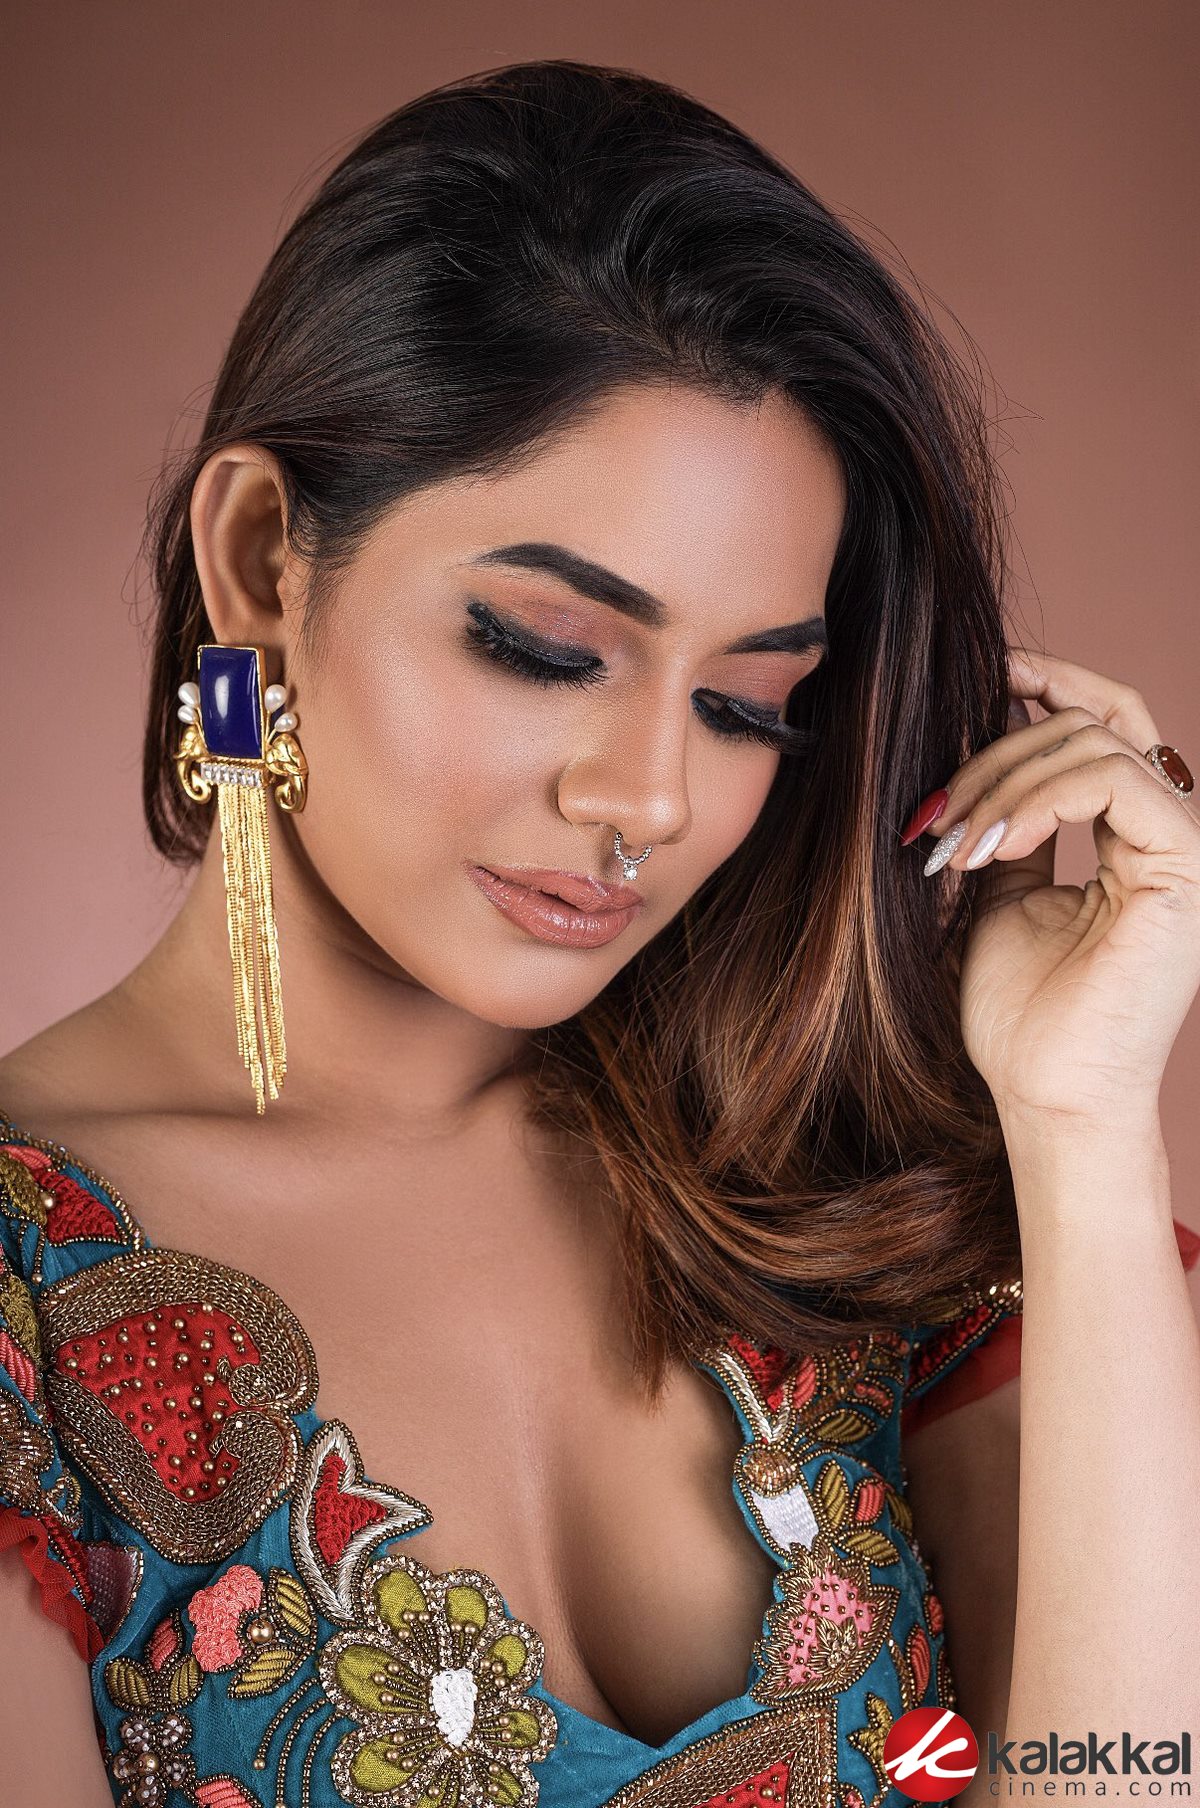 Beauty Queen Aishwarya Dutta Latest Photos